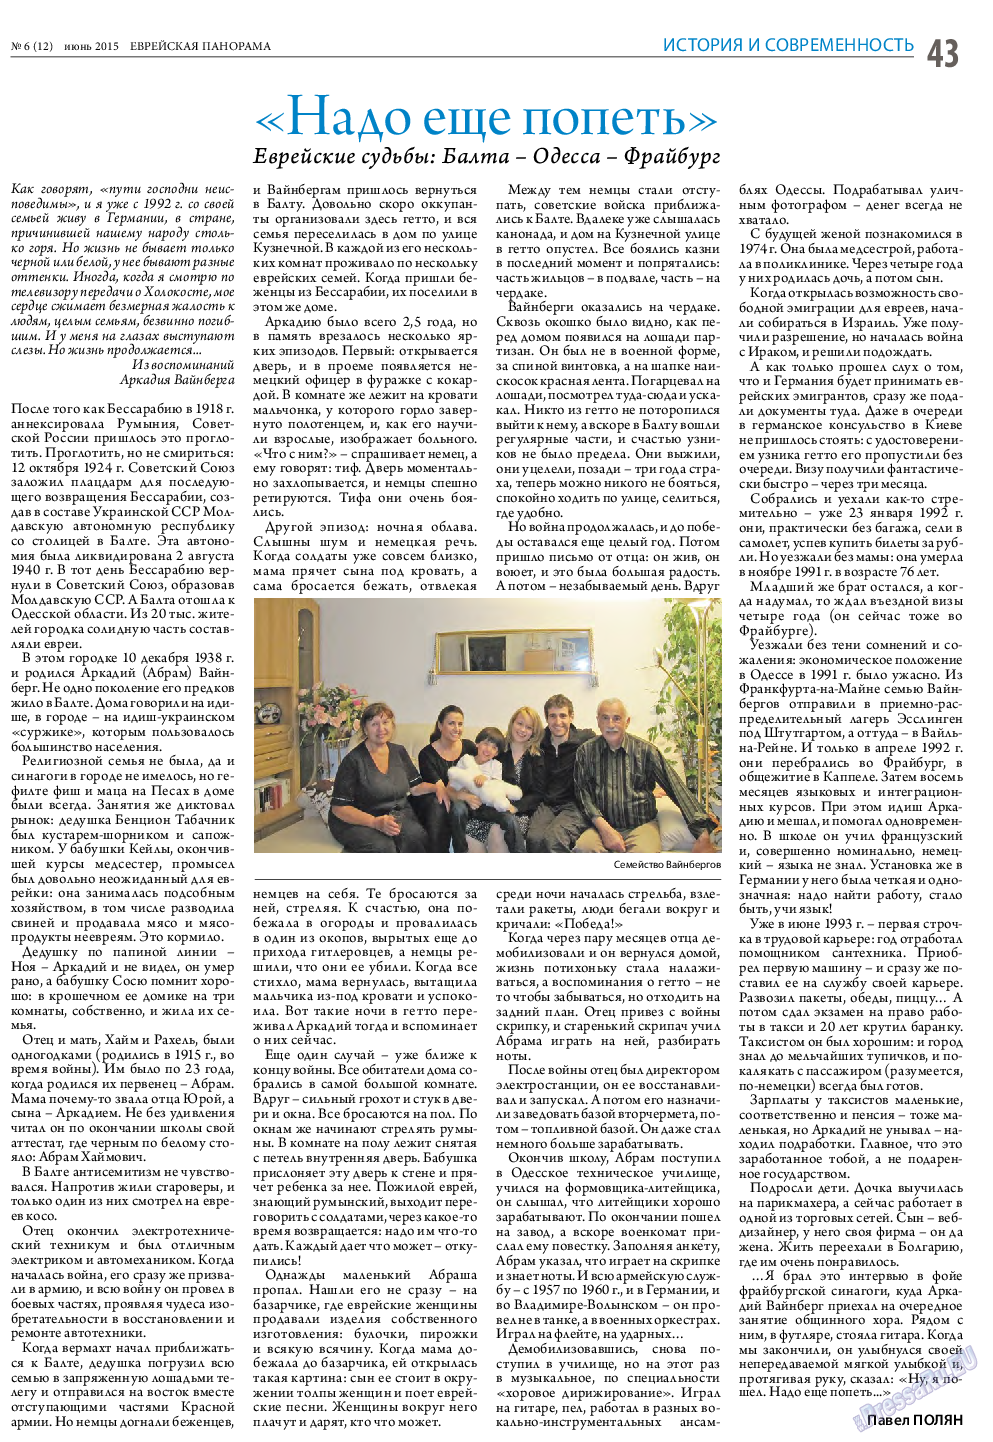 Еврейская панорама, газета. 2015 №6 стр.43